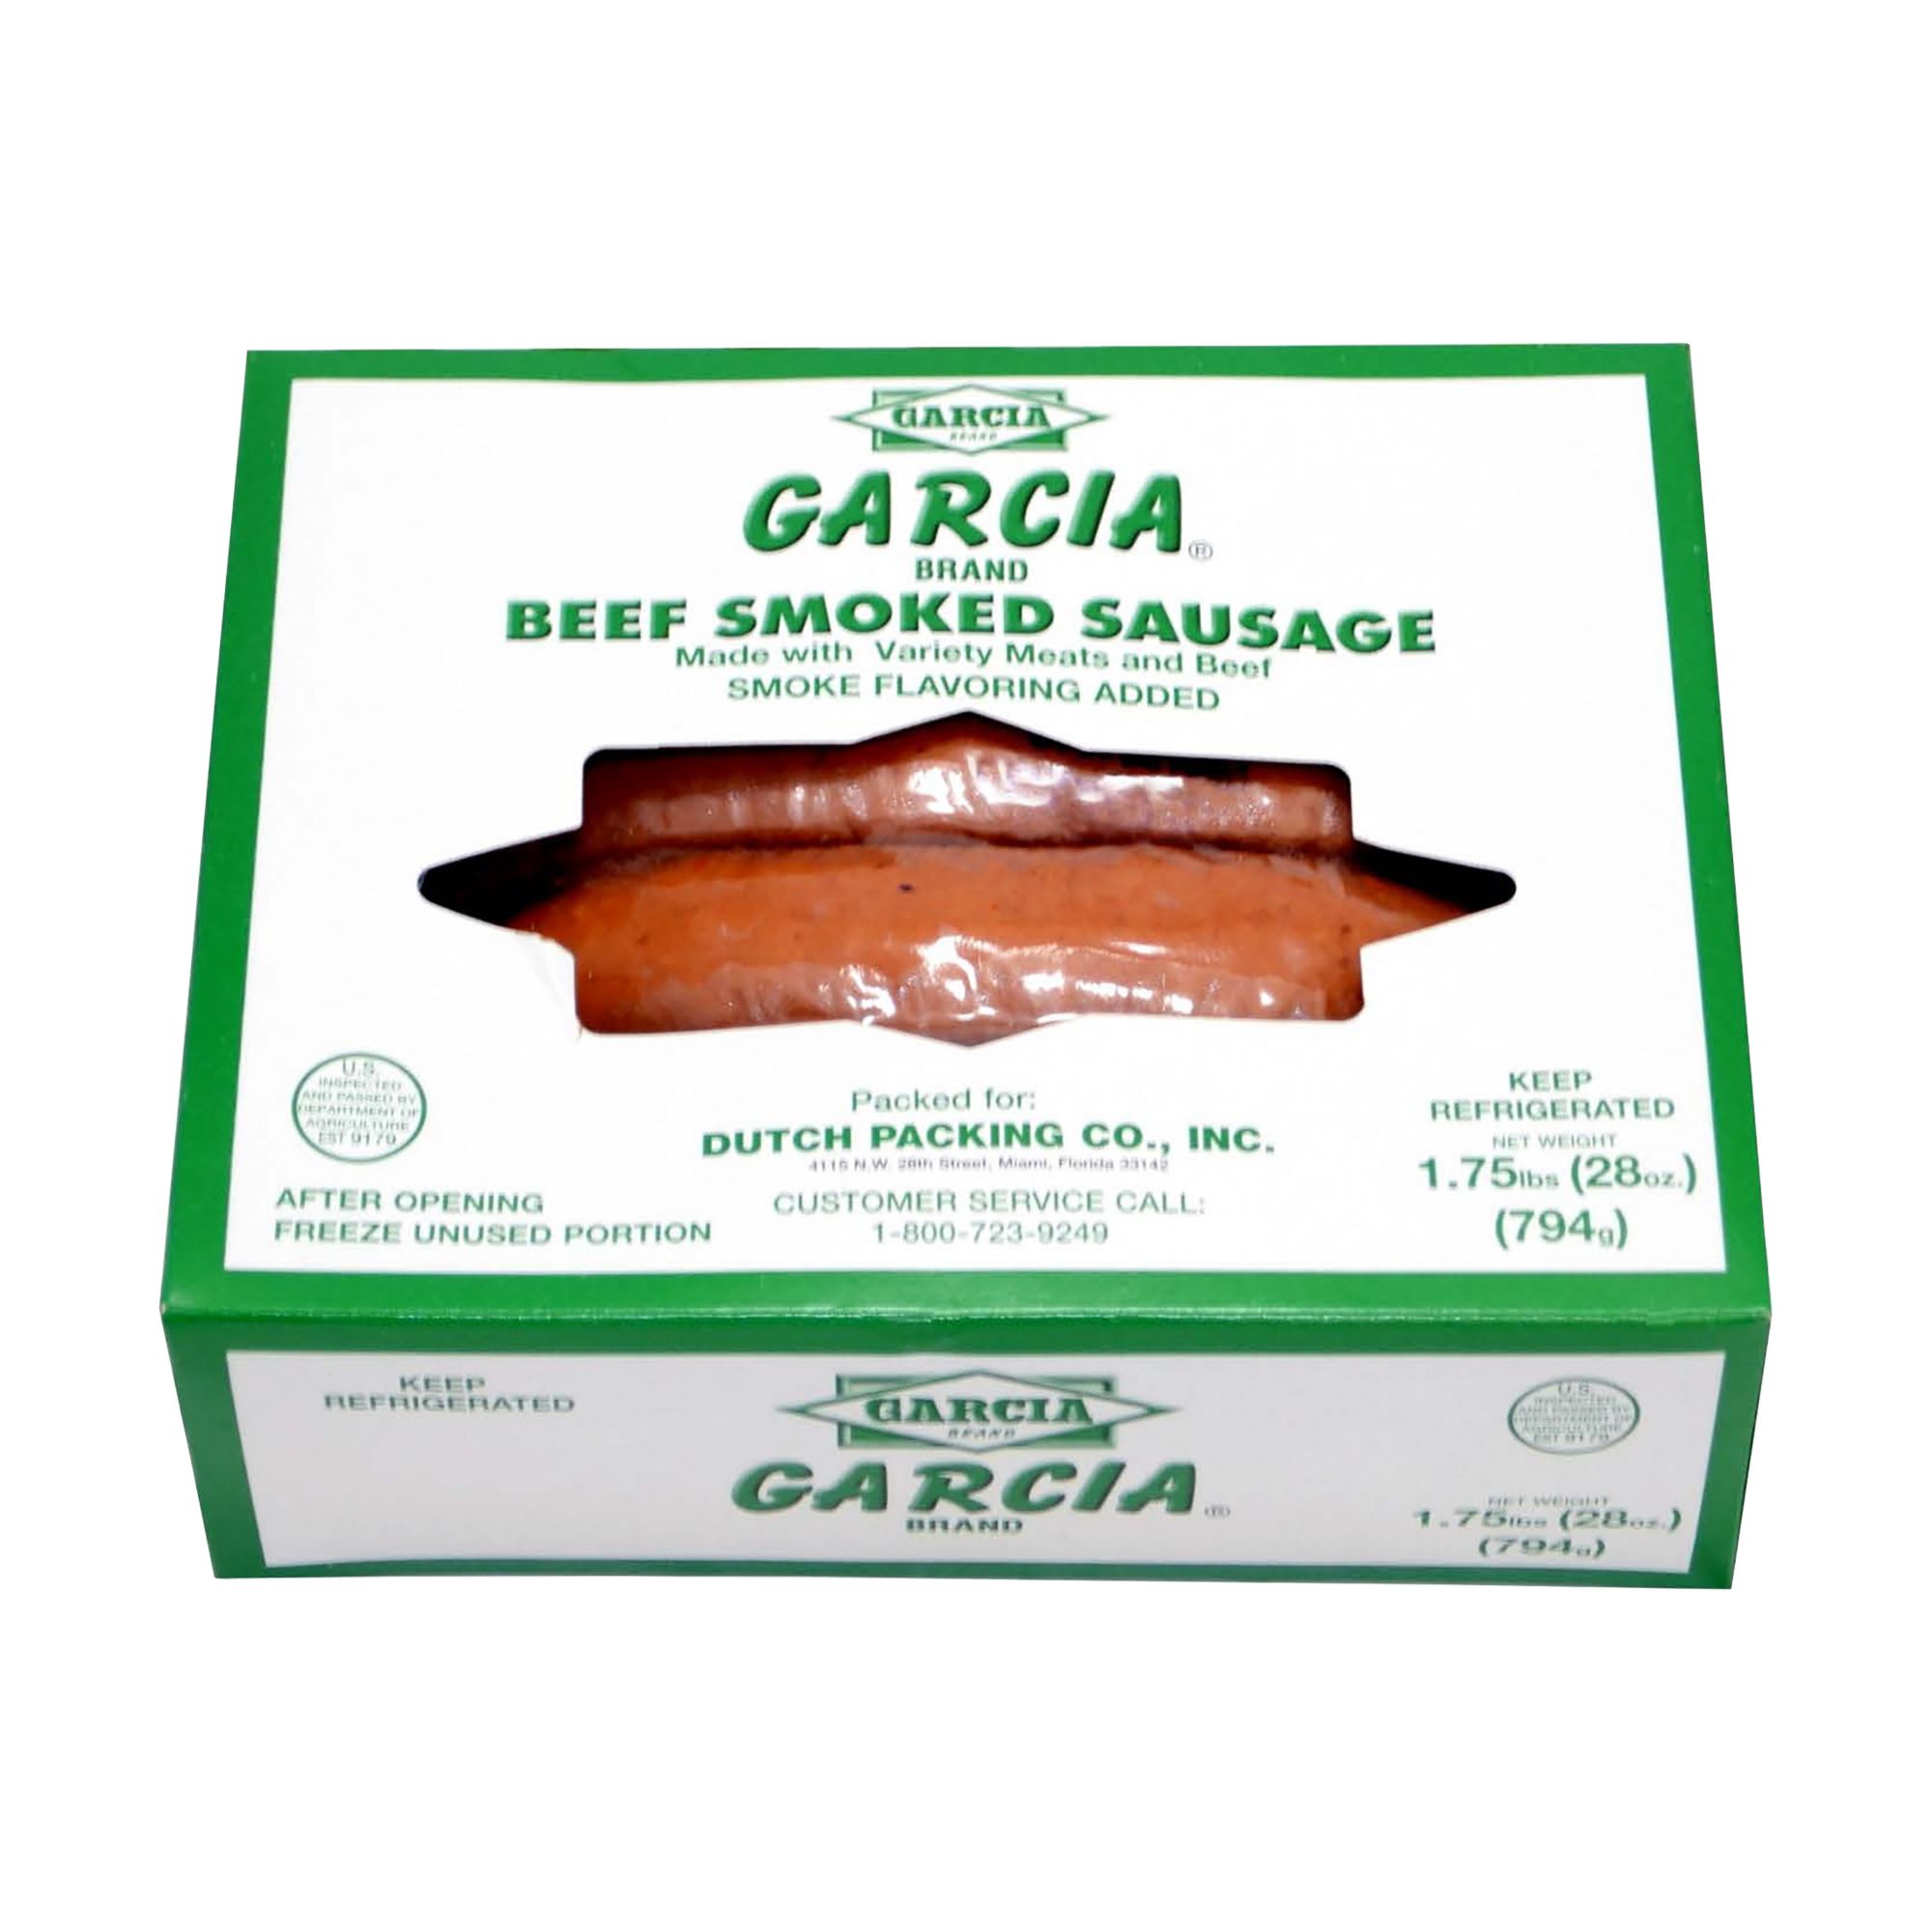 Garcia Beef Smoked Sausage, 1.75 lbs.